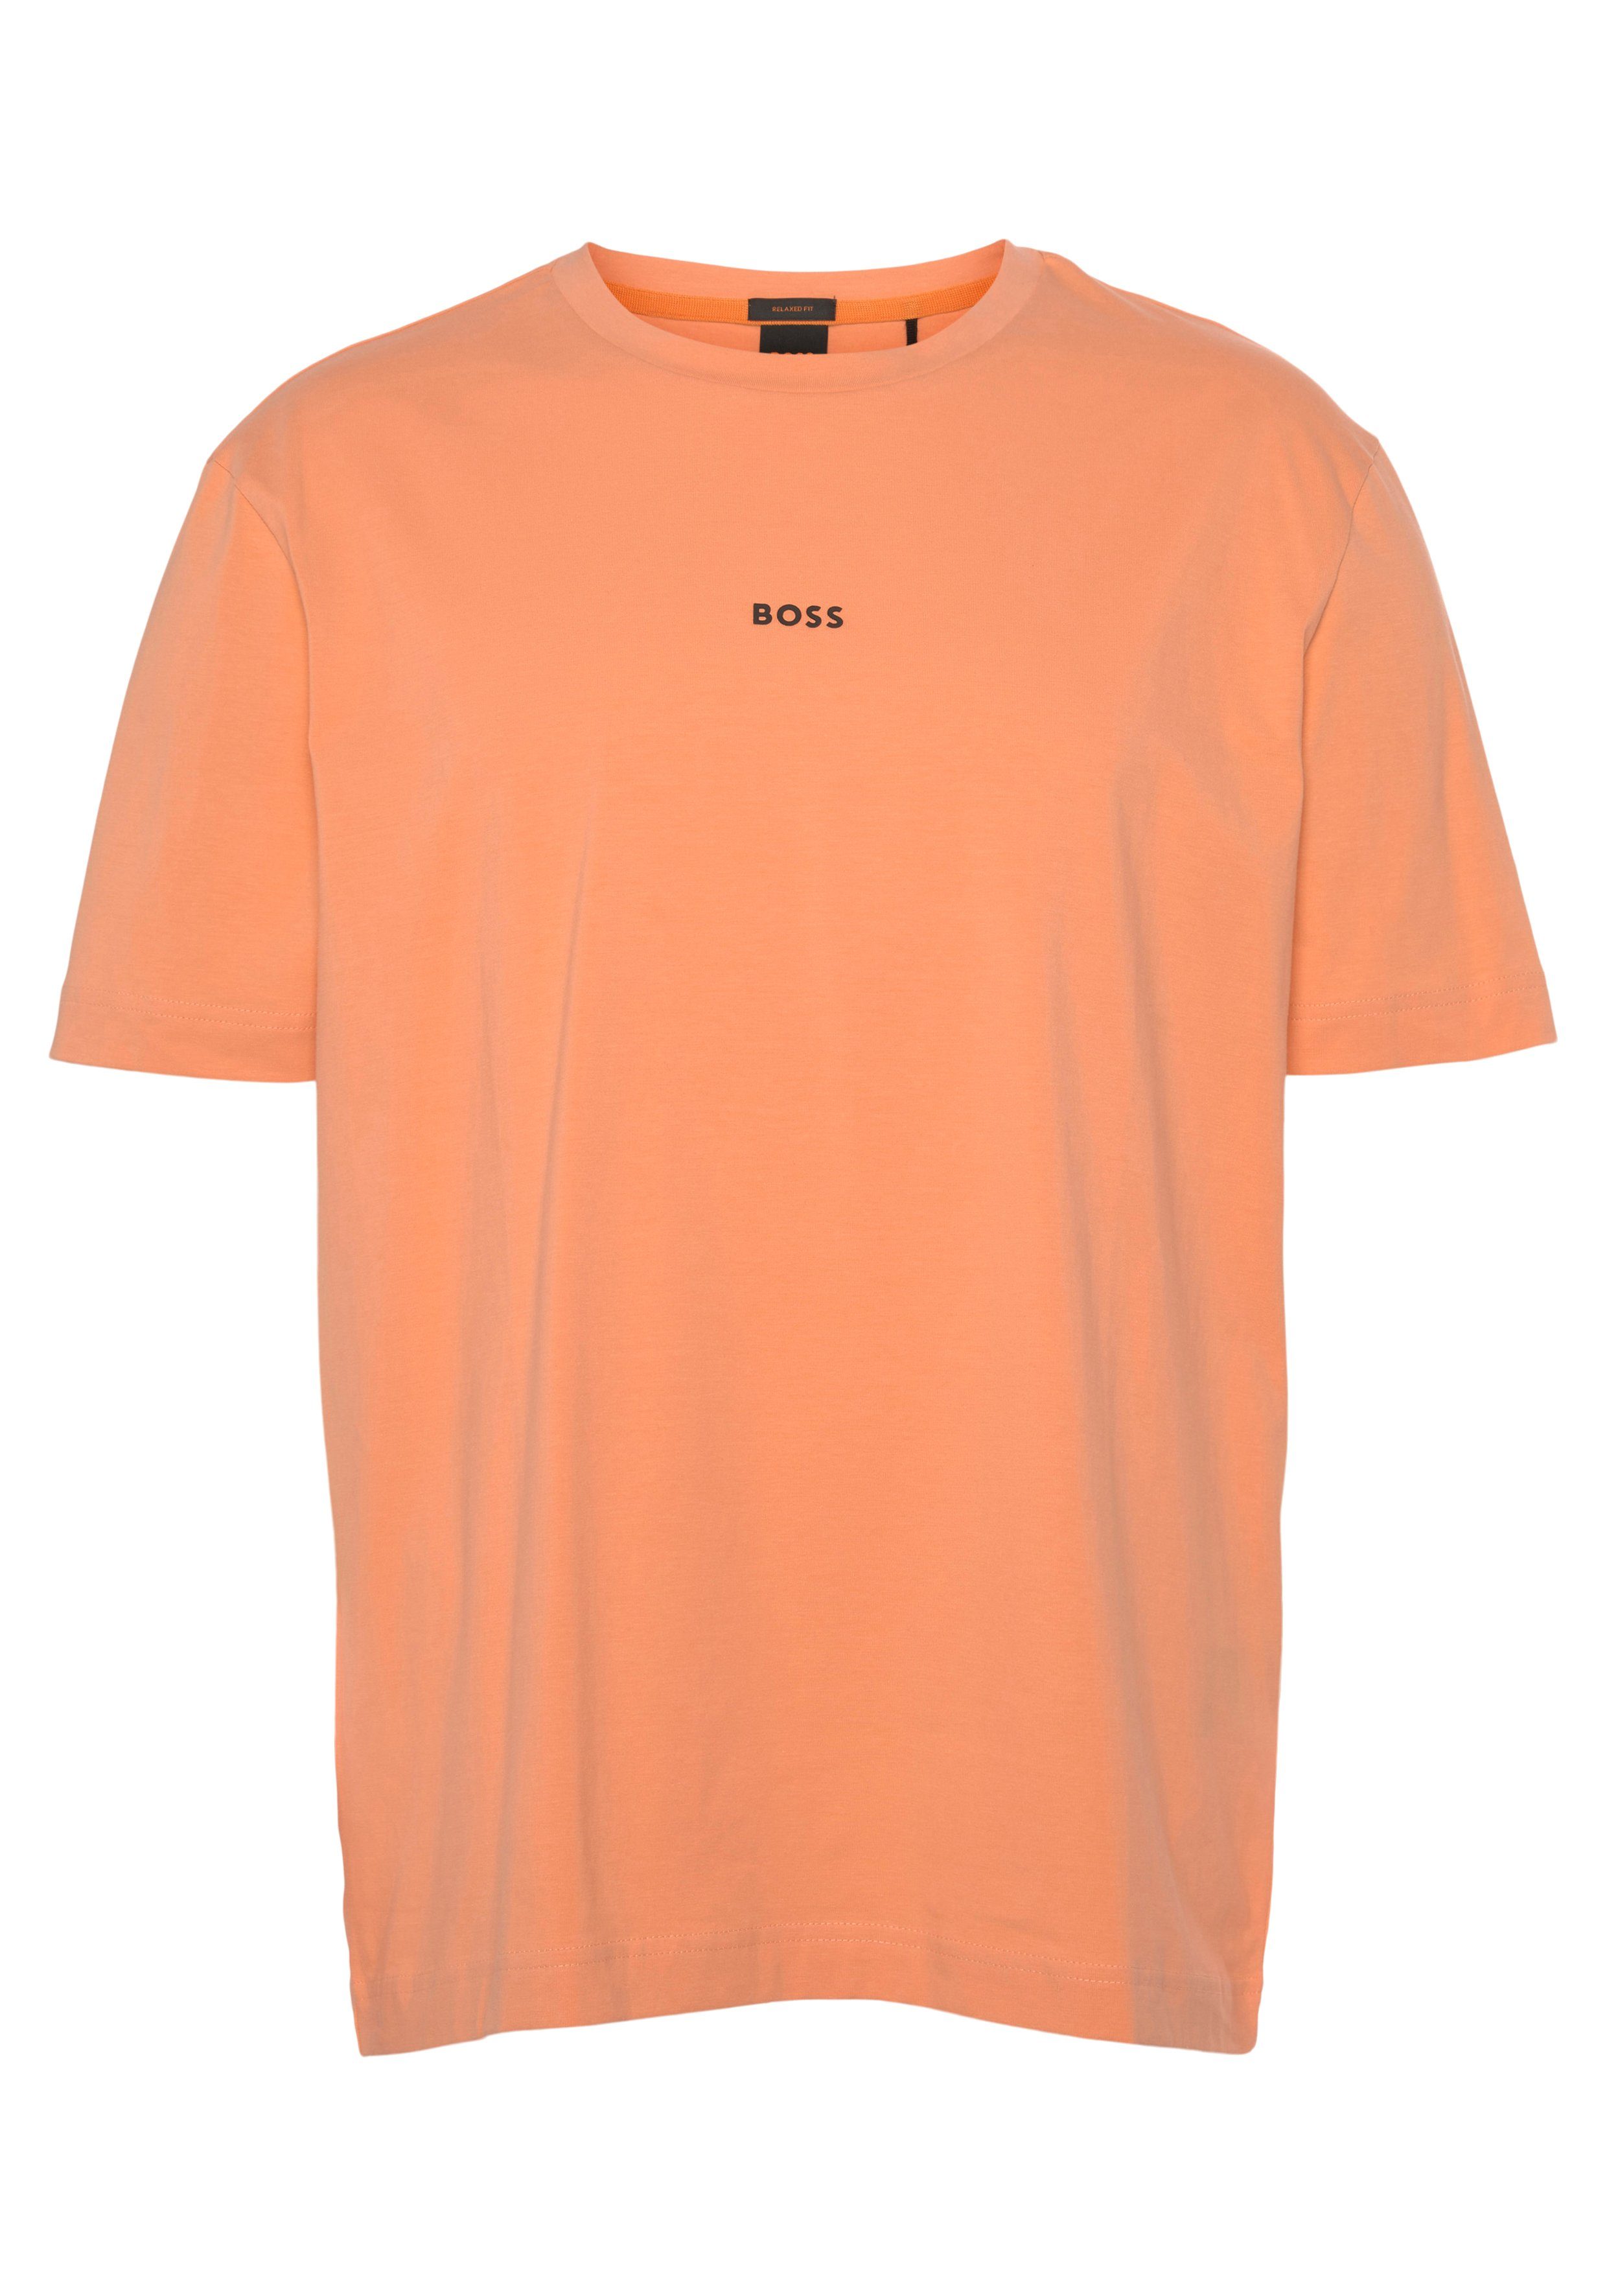 BOSS TChup mit ORANGE der auf Kurzarmshirt Brust BOSS-Logodruck light/Pastel_orange